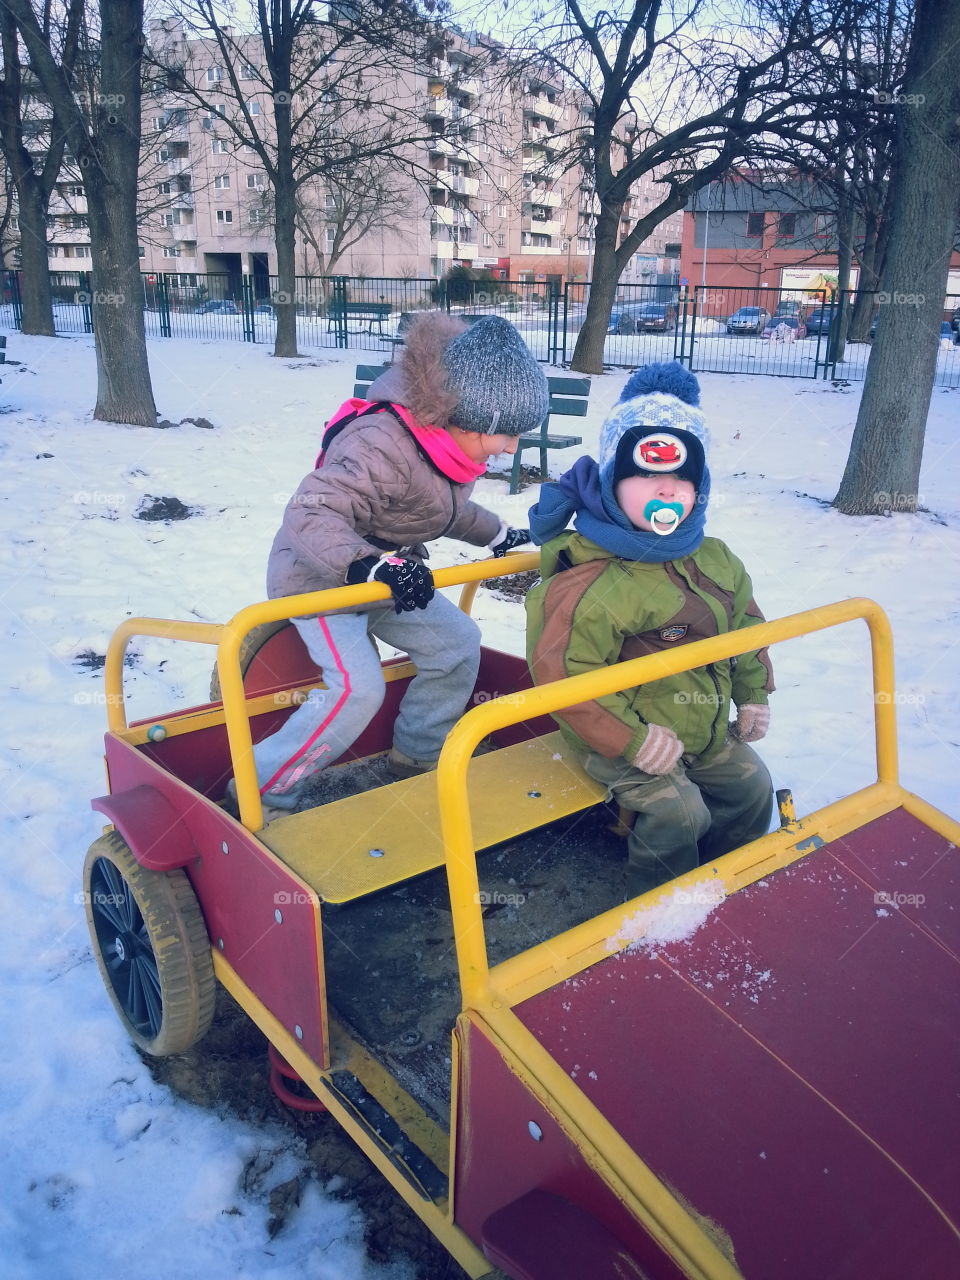 Vehicle, People, Child, Winter, Snow